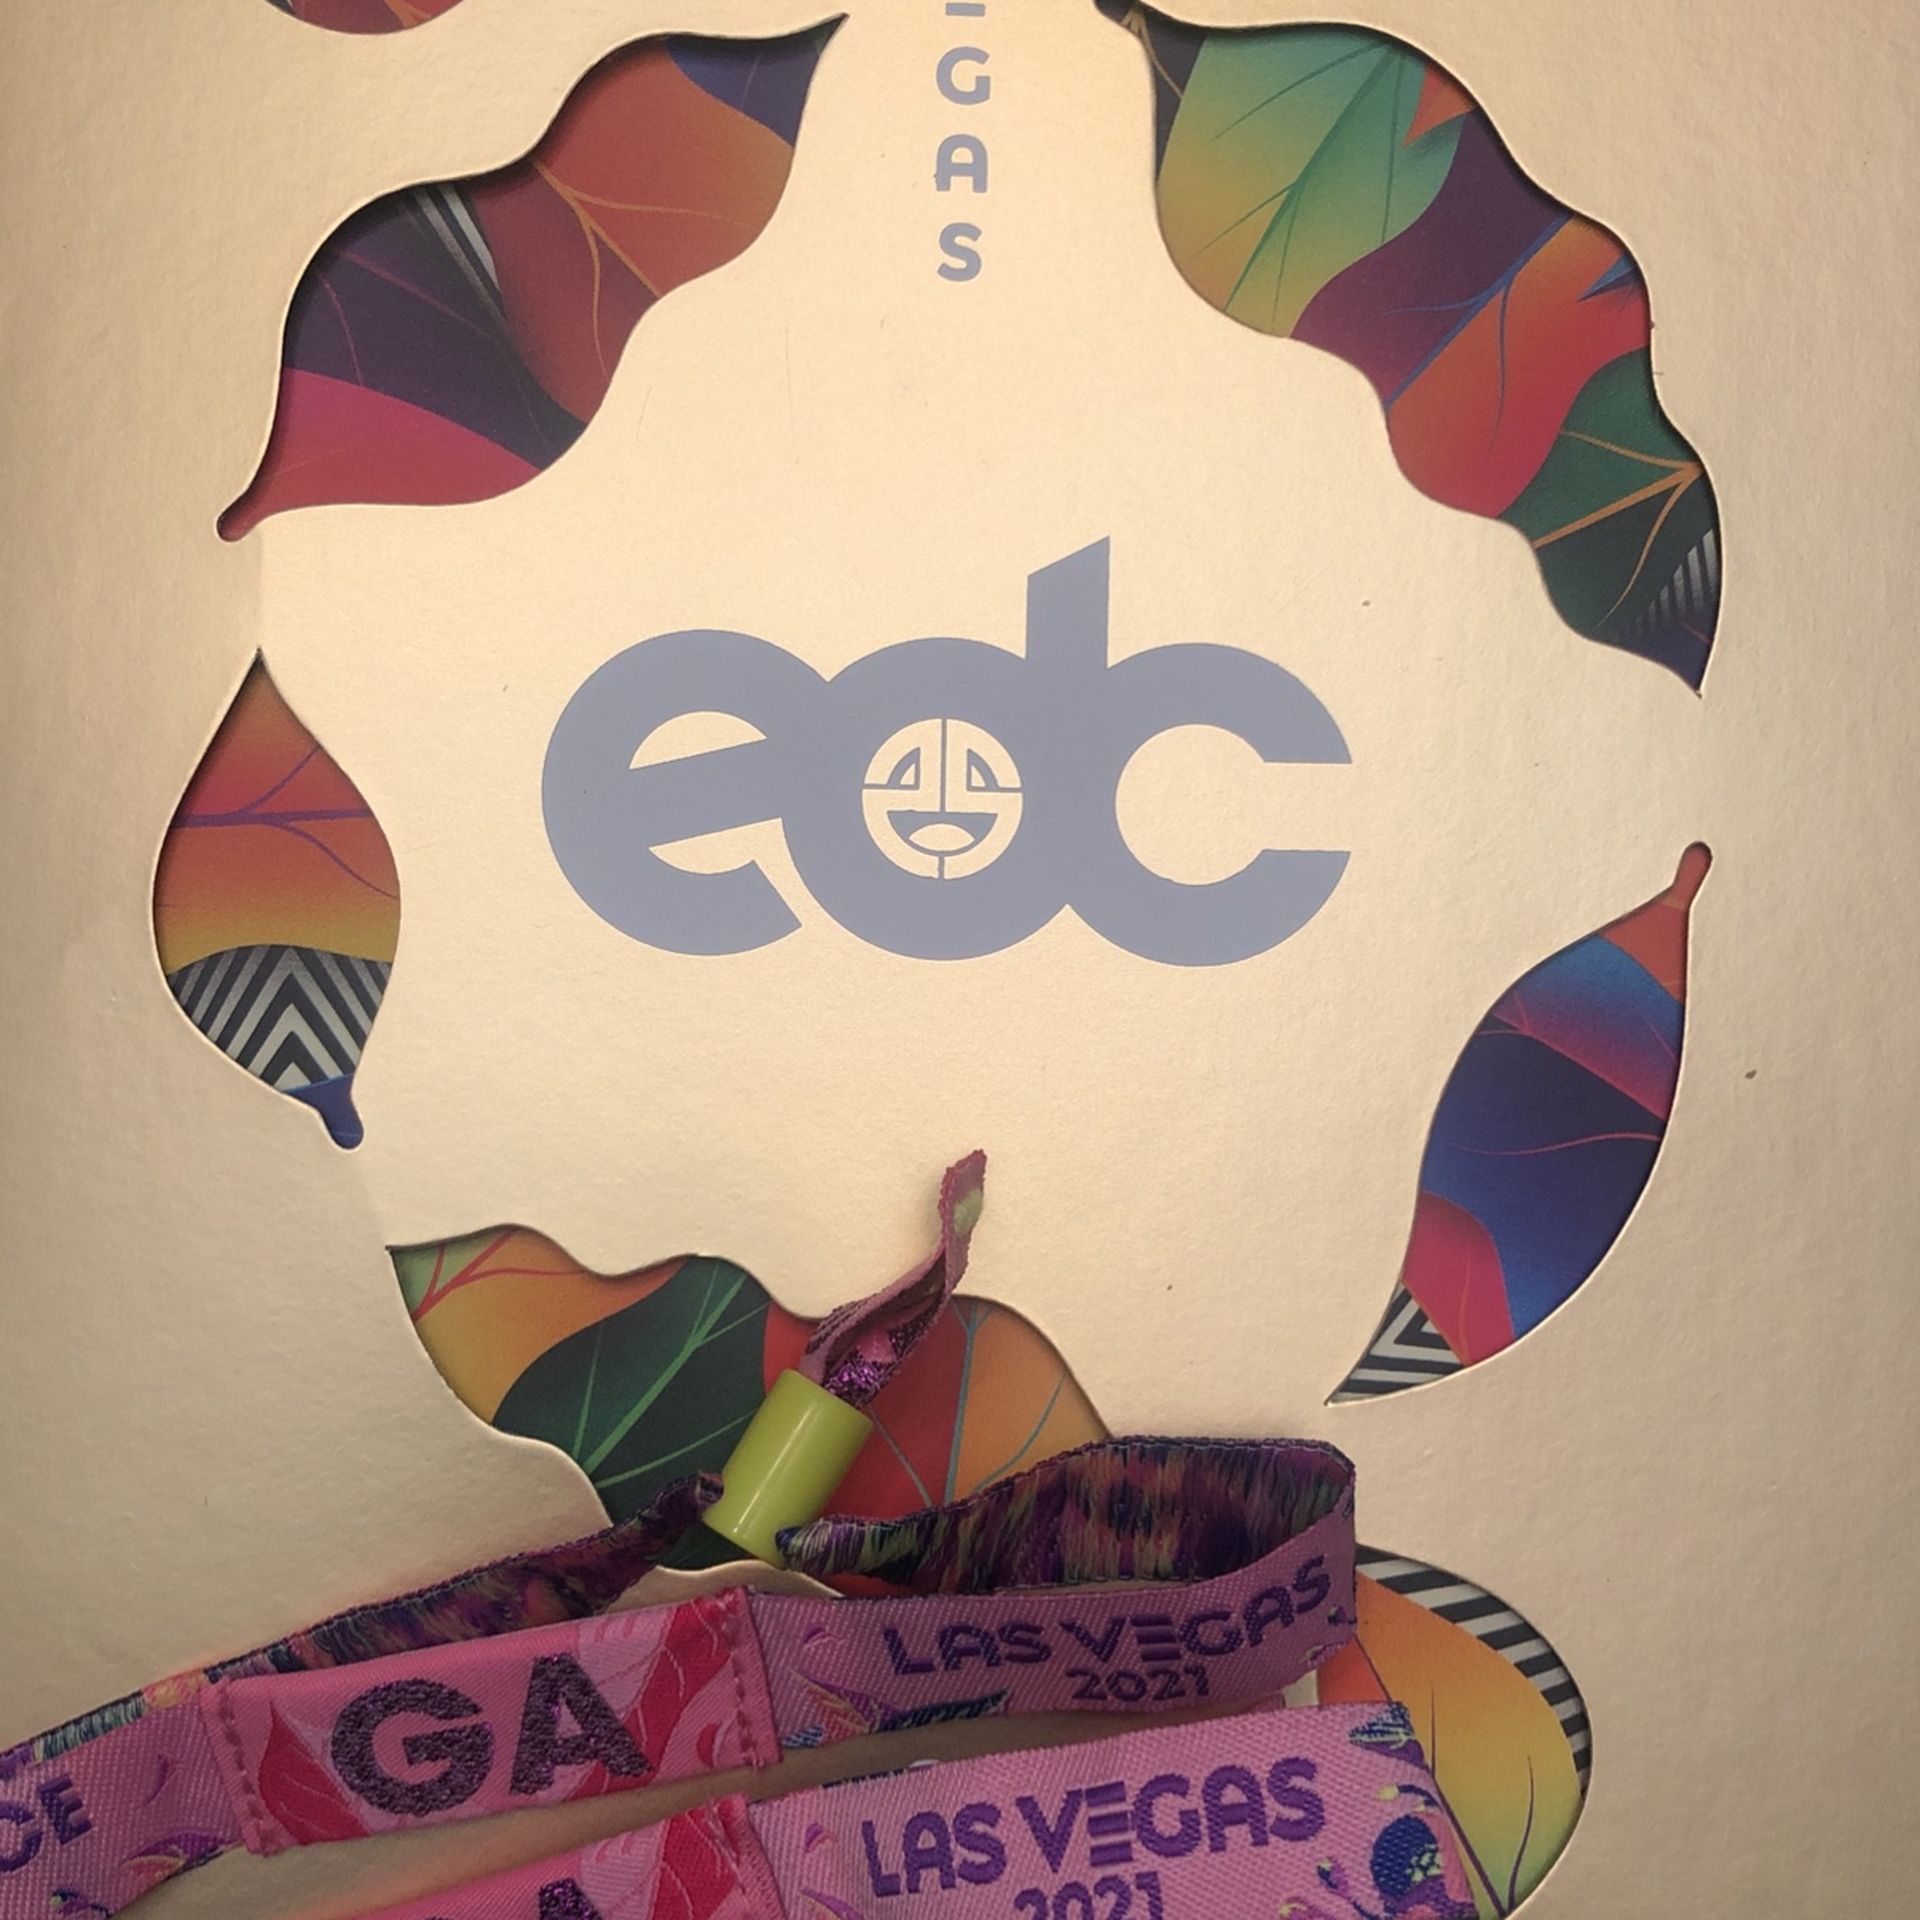 EDC Las Vegas 2021- Sunday Only